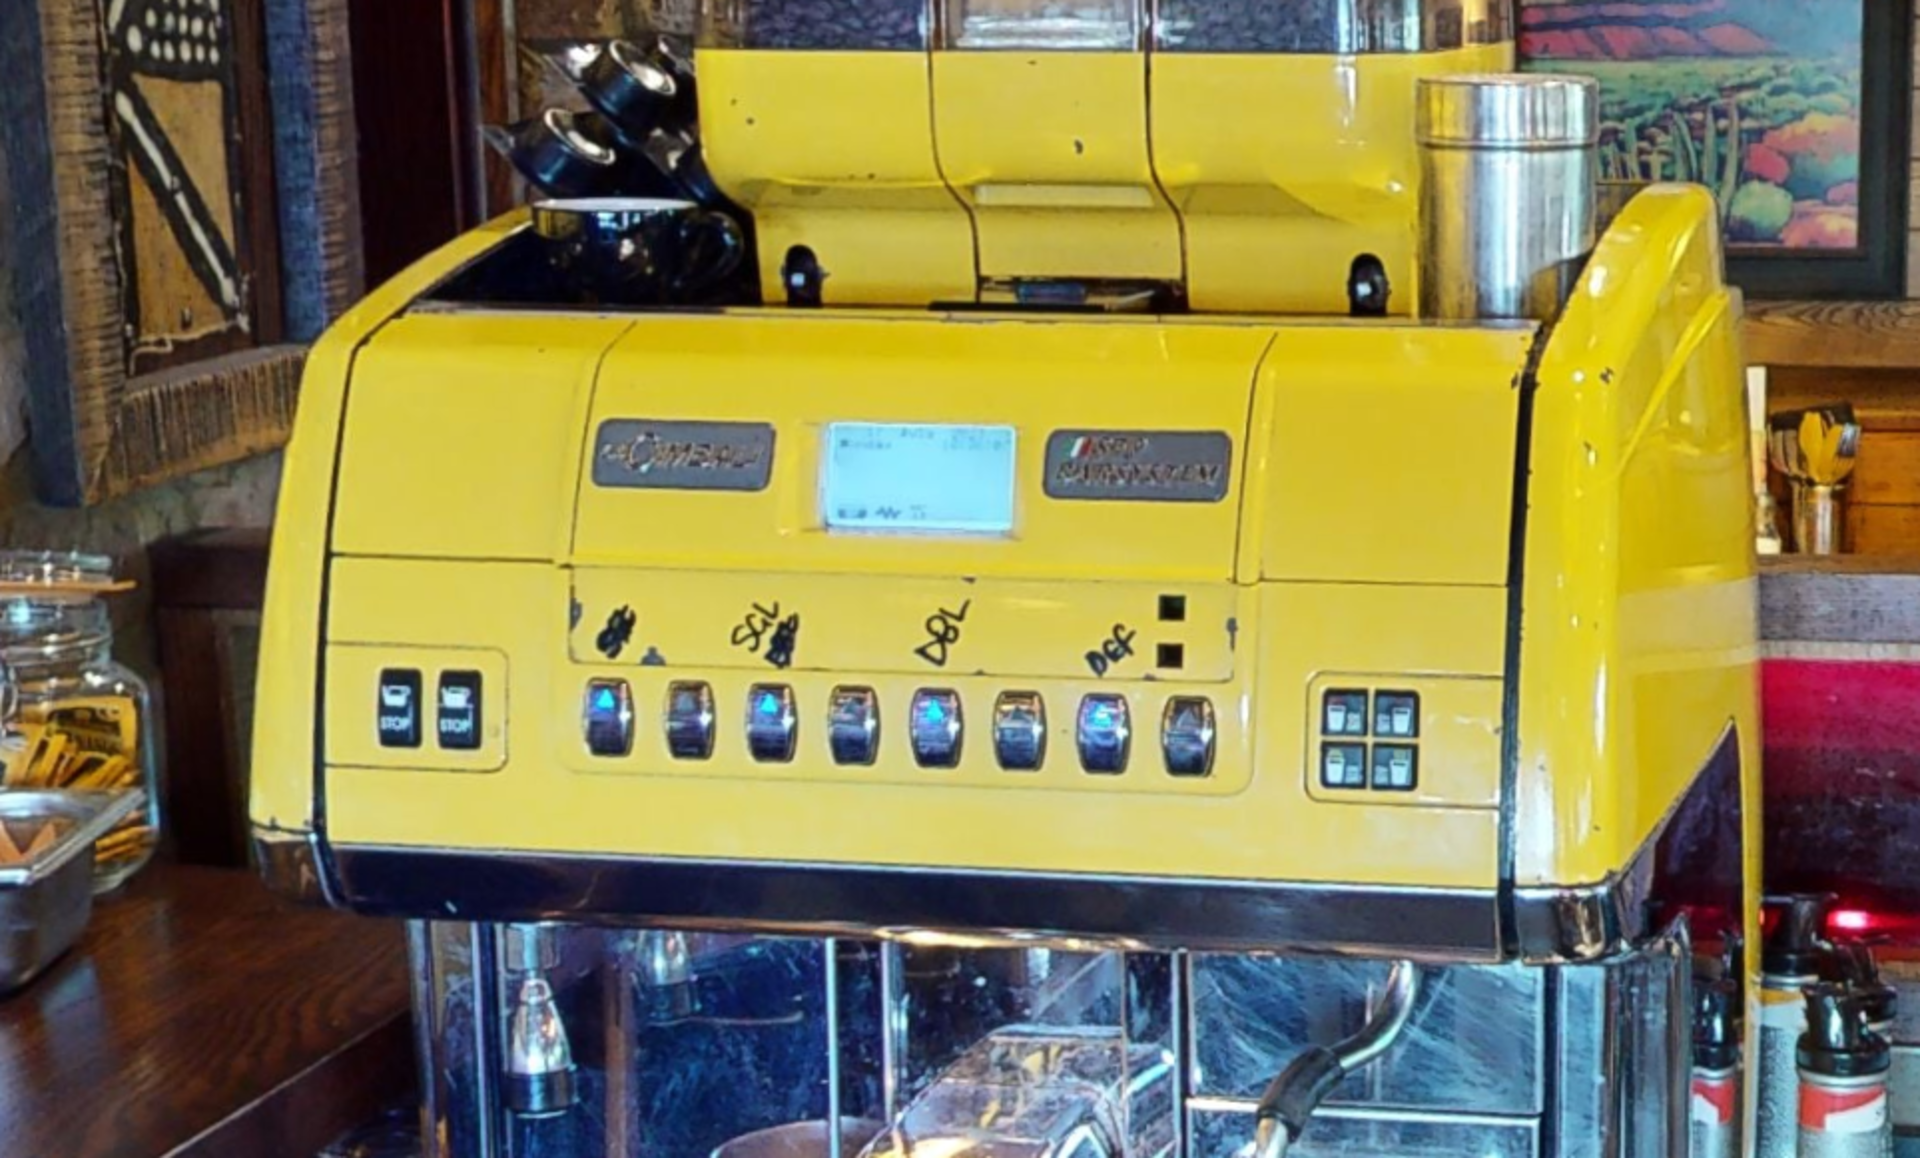 1 x La Cimbali S39 Barsystem Espresso Bean to Cup Coffee Machine - Bright Yellow Finish - 240V Plug - Image 5 of 14